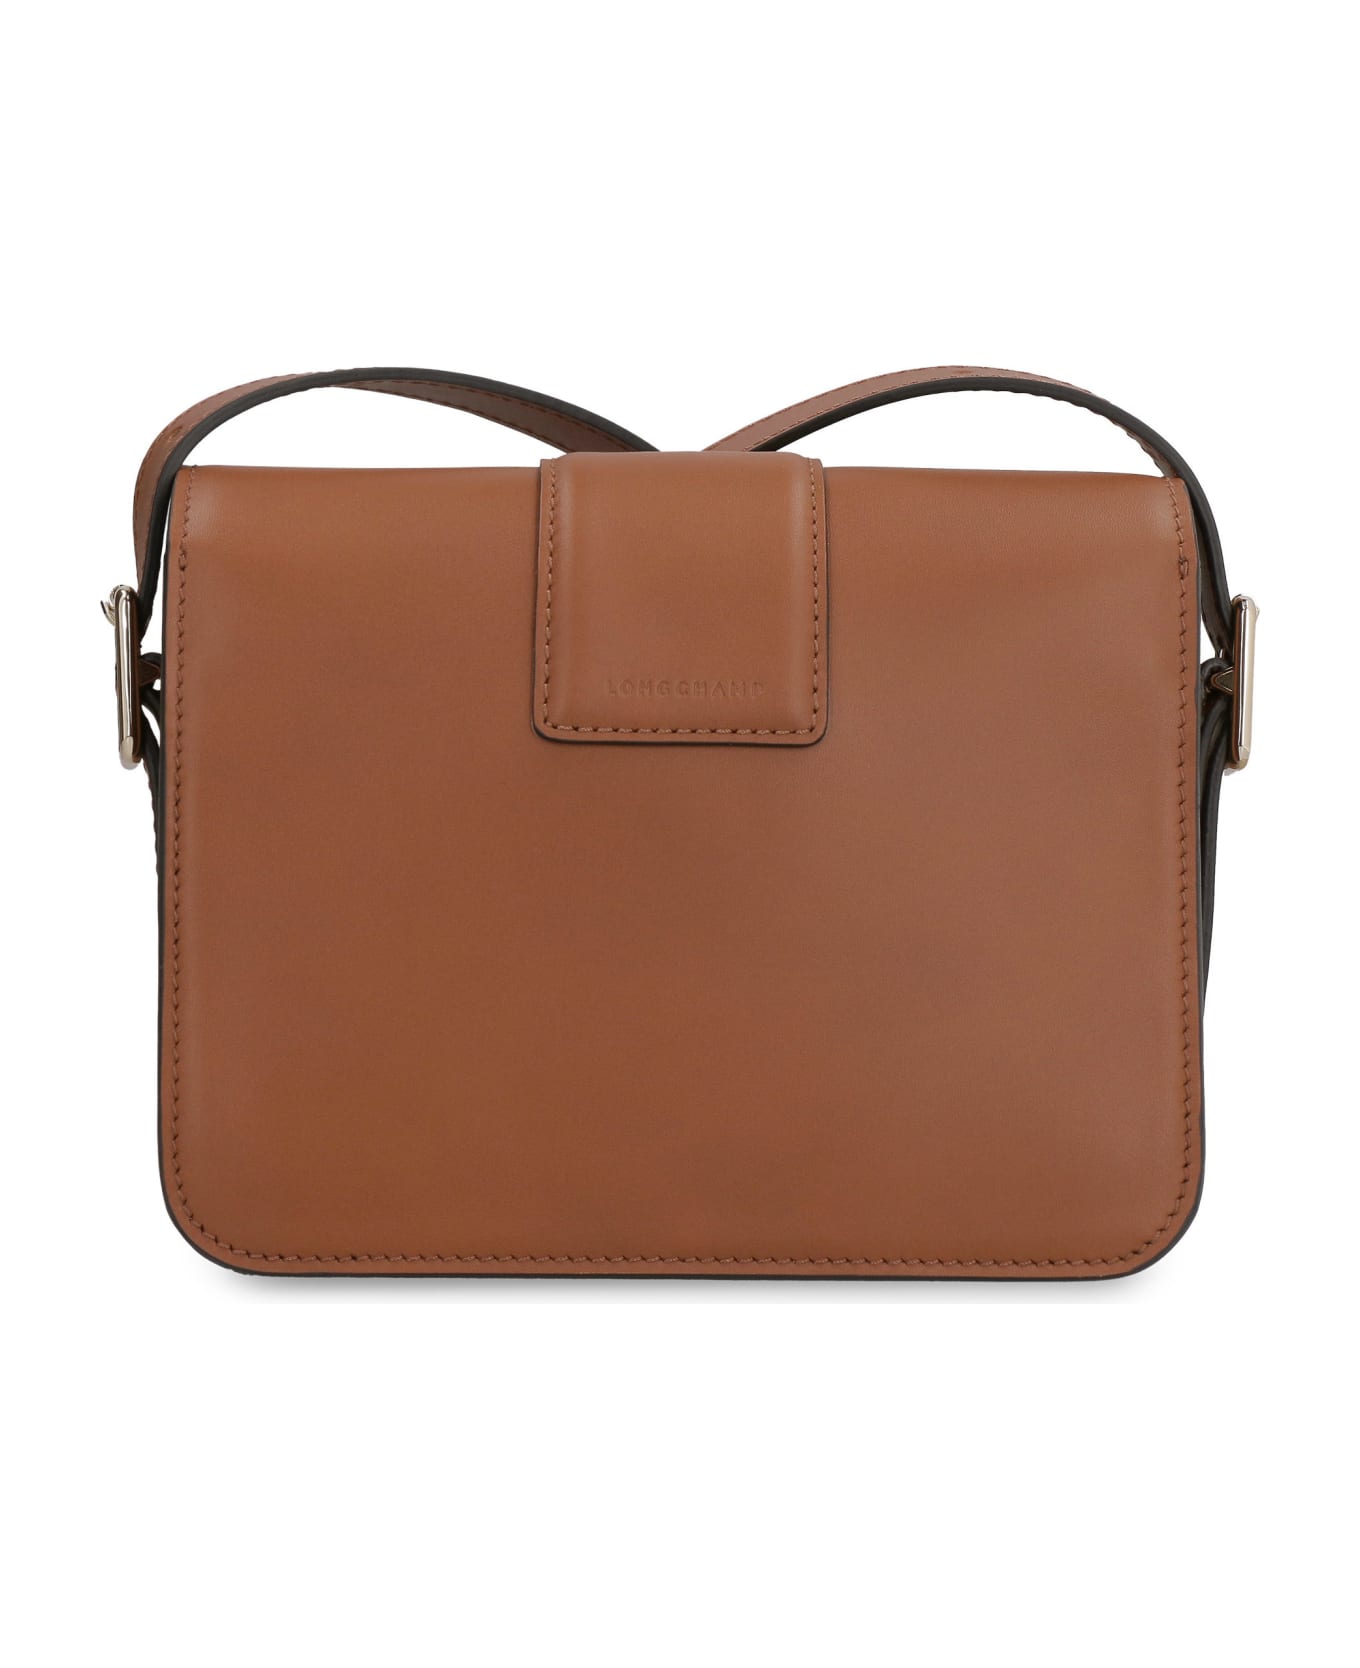 Longchamp Box-trot Leather Crossbody Bag - Brown